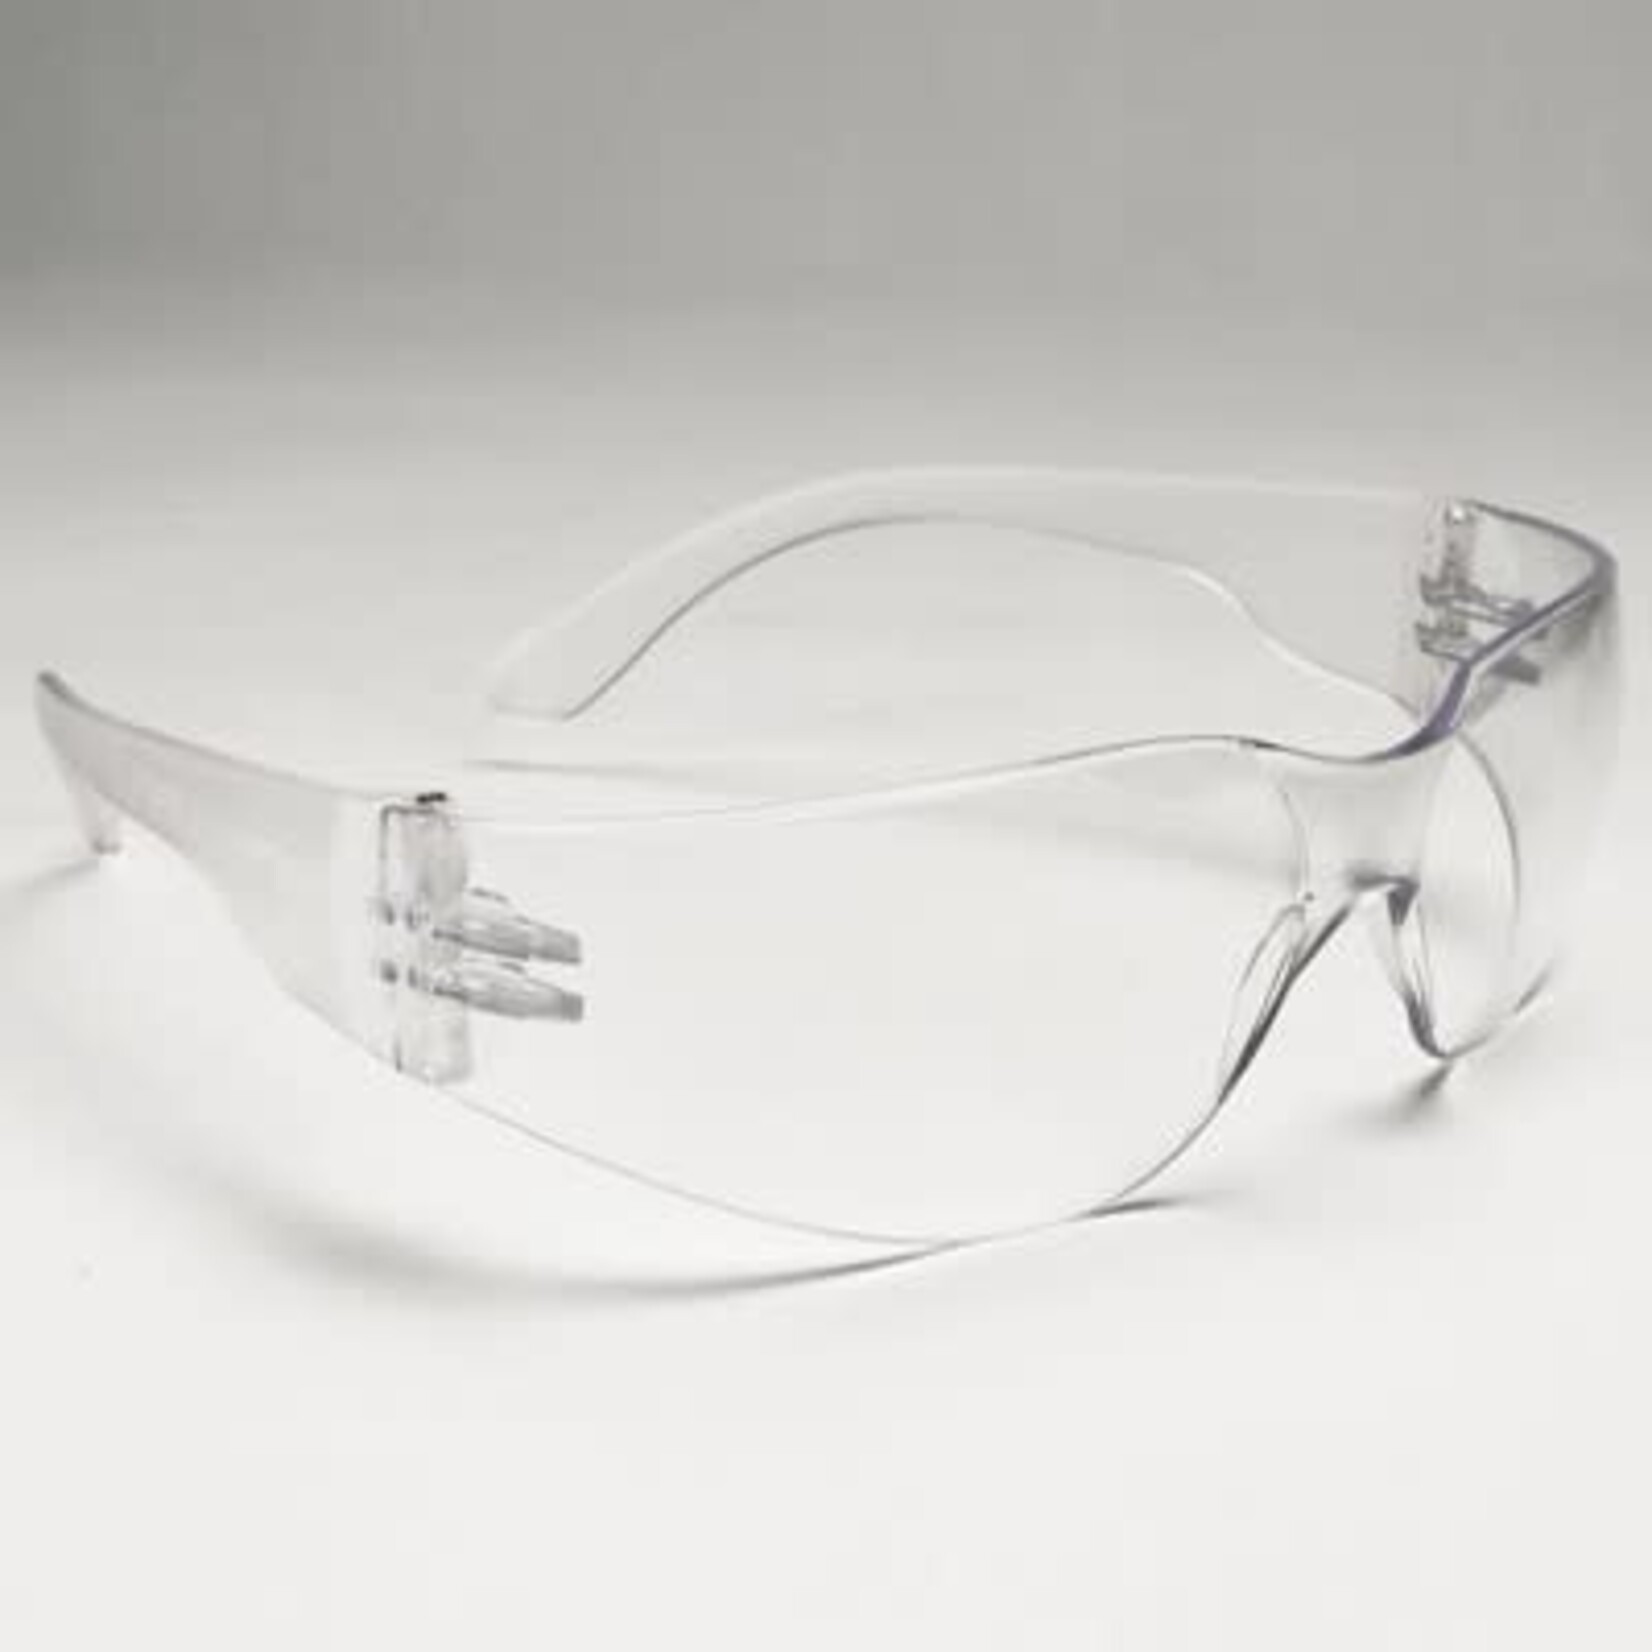 N-Specs Safety Glasses